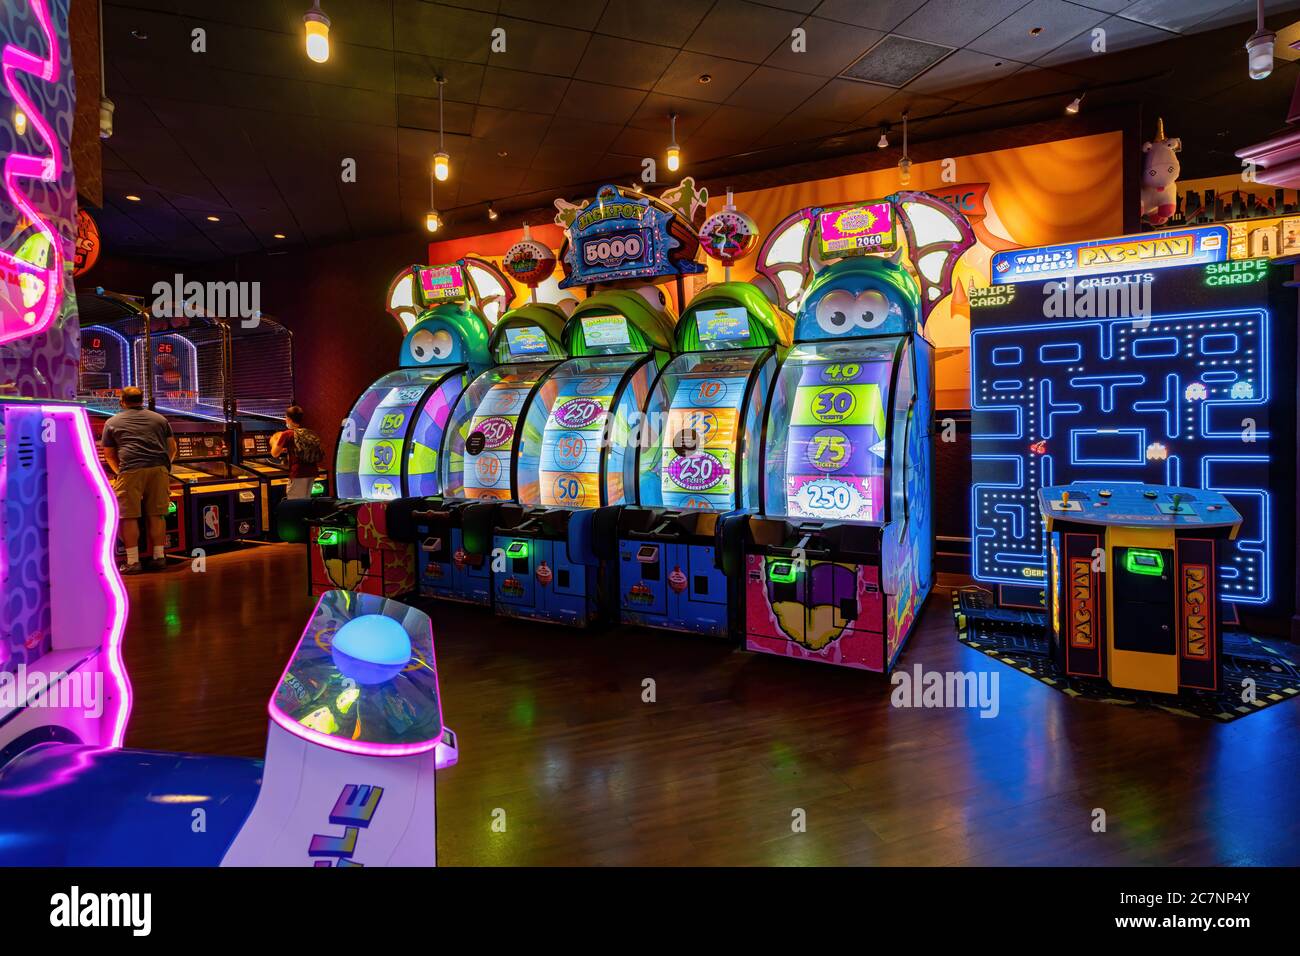 Las Vegas, JUL 17, 2020 - Arcade game cetner of New York New York Casino  Stock Photo - Alamy